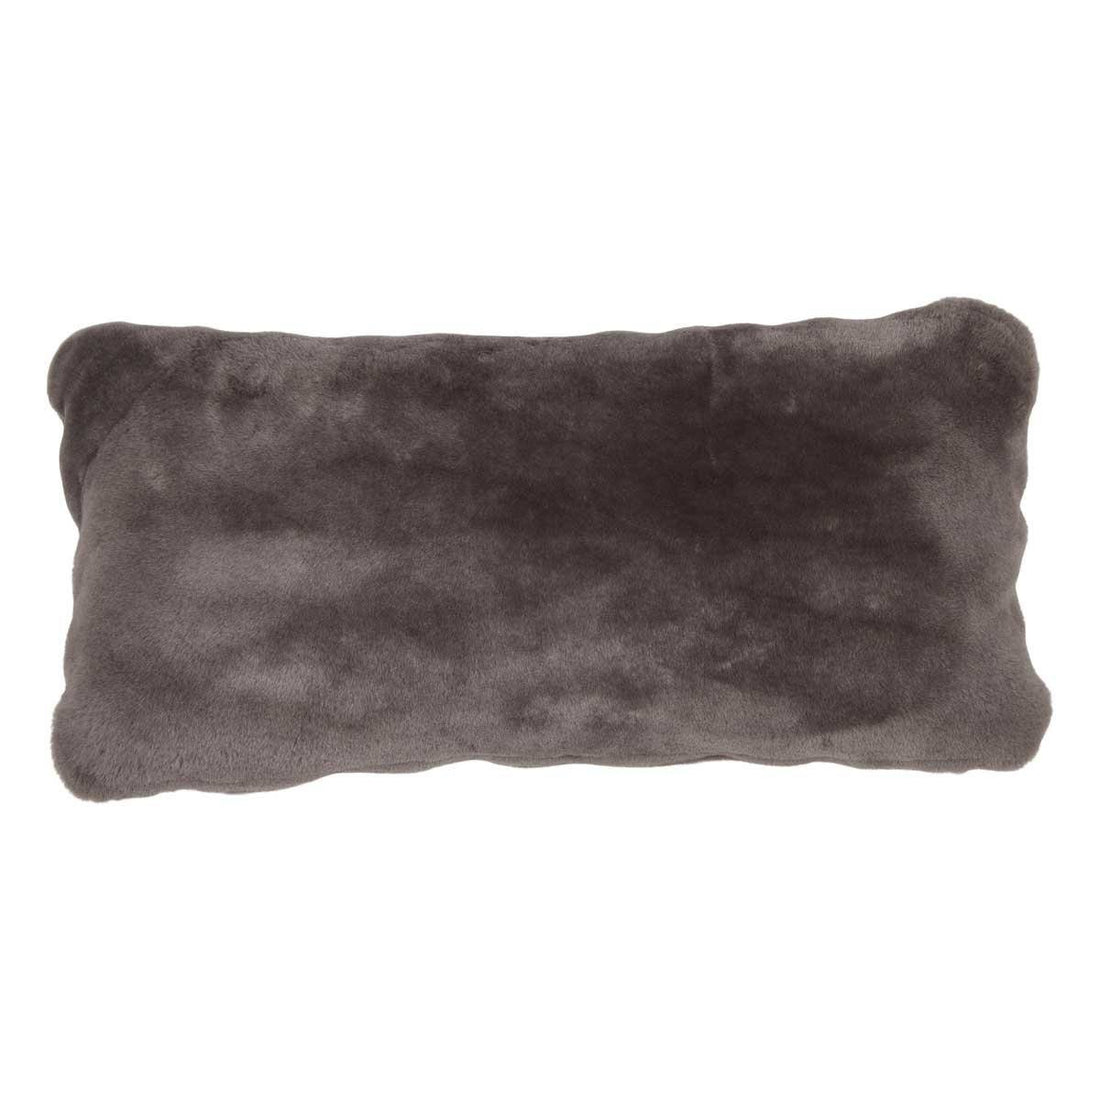 Pillow | Lambskin, Moccasin | New Zealand | 28x56 cm.